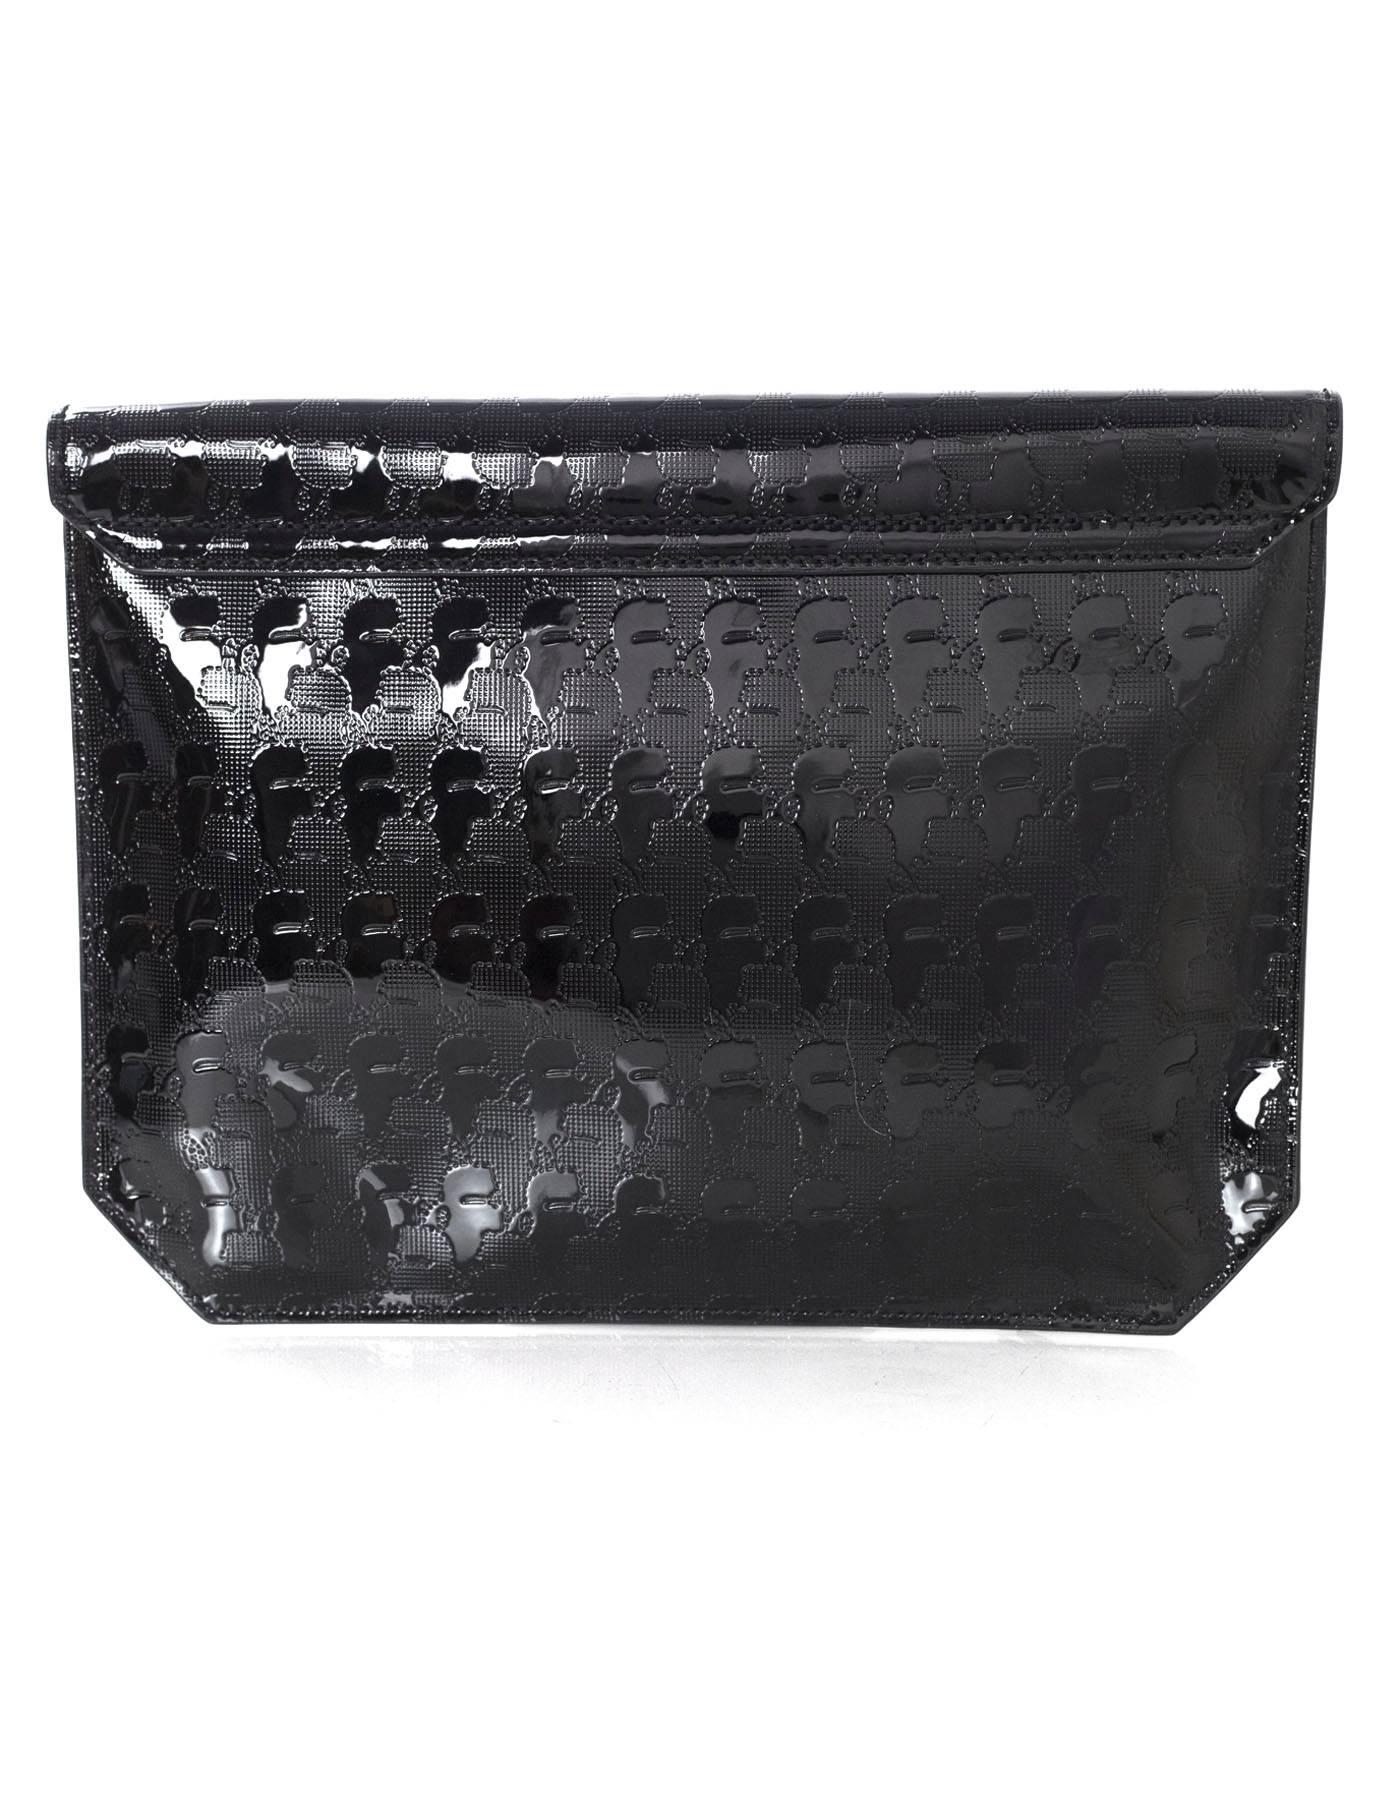 Women's Karl Lagerfeld Black Patent Clutch Bag